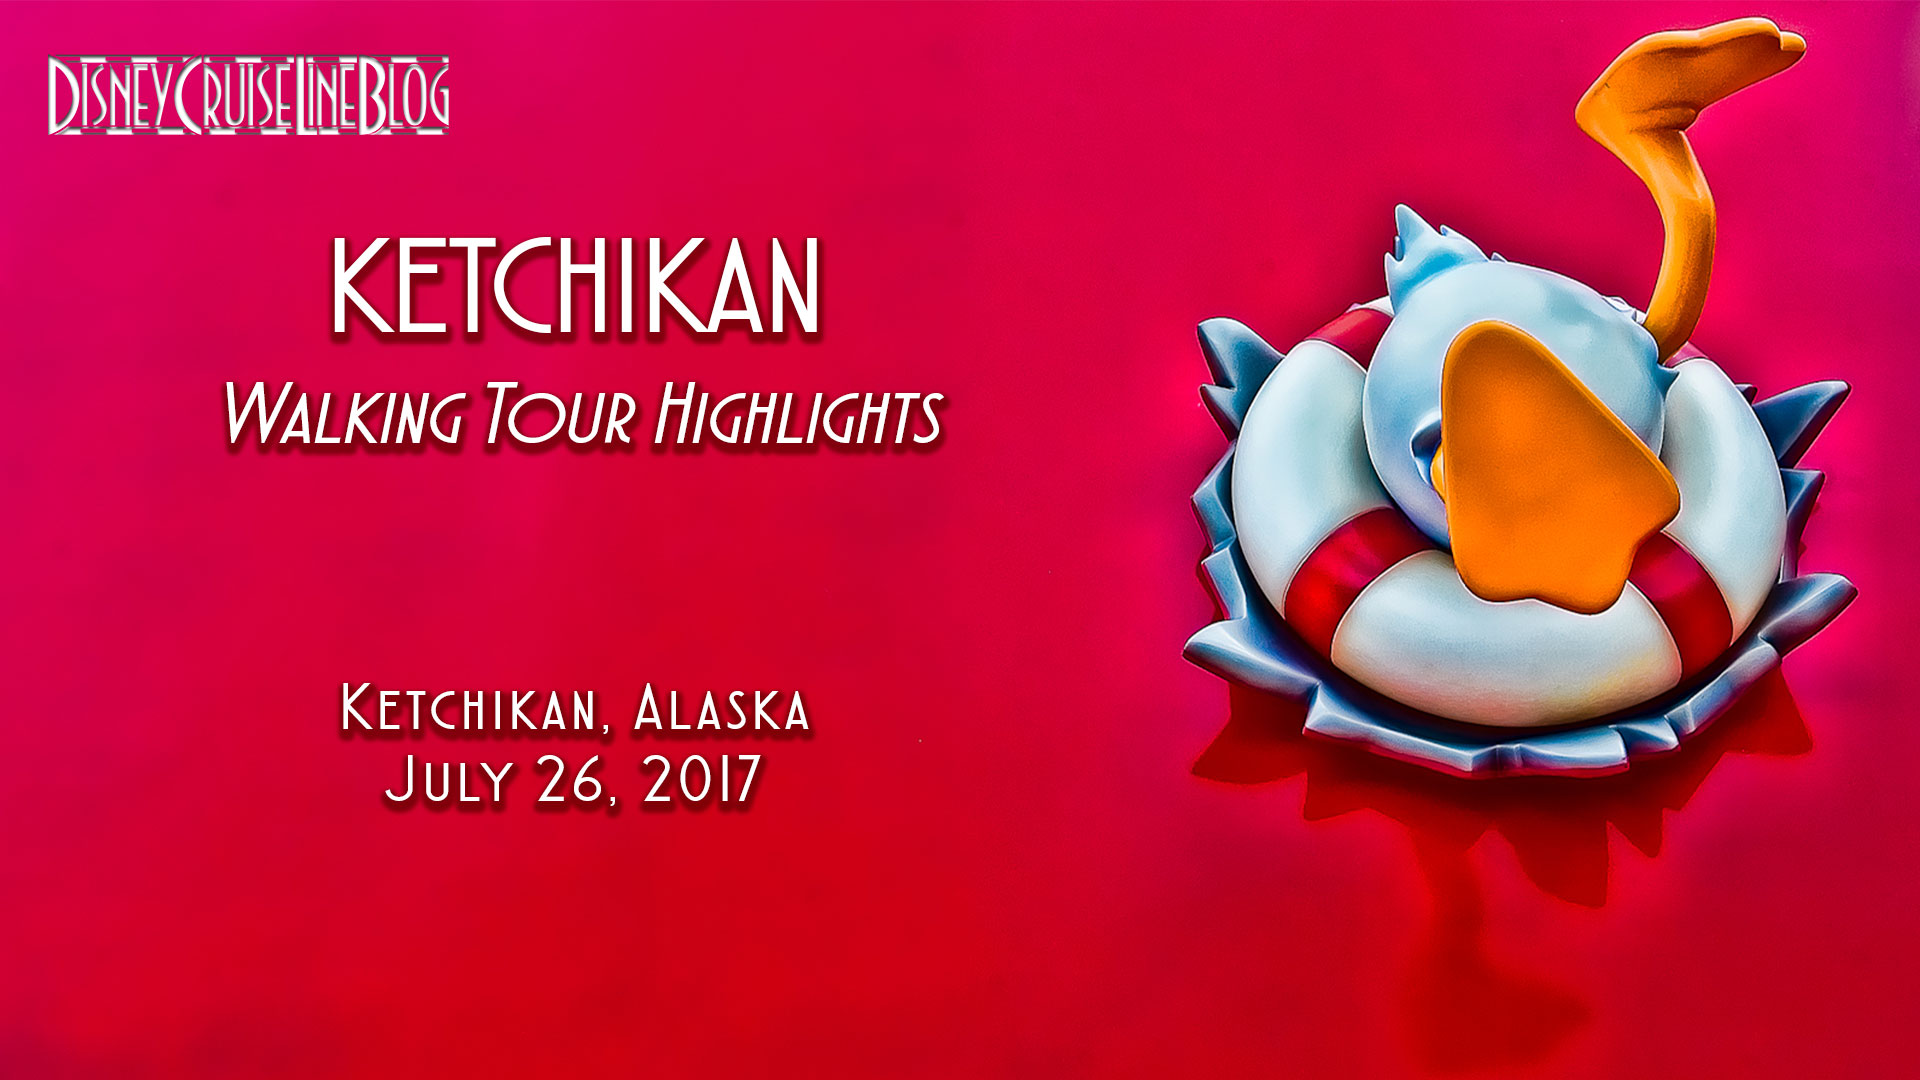 Ketchikan Walking Tour Hightlights Video